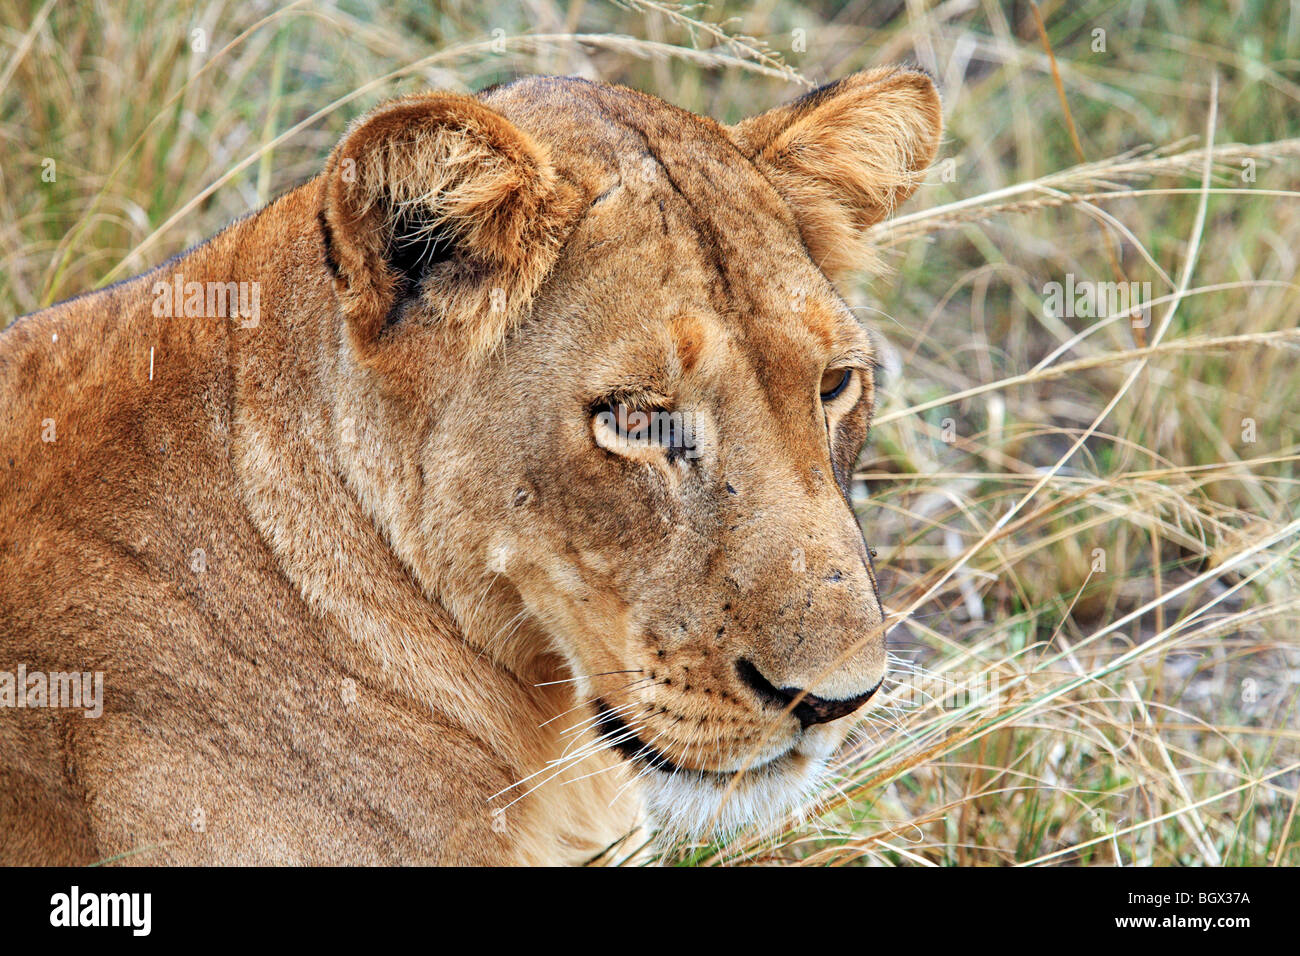 Female lion, Murchison Falls Conservation Area, Uganda, East Africa Stock Photo